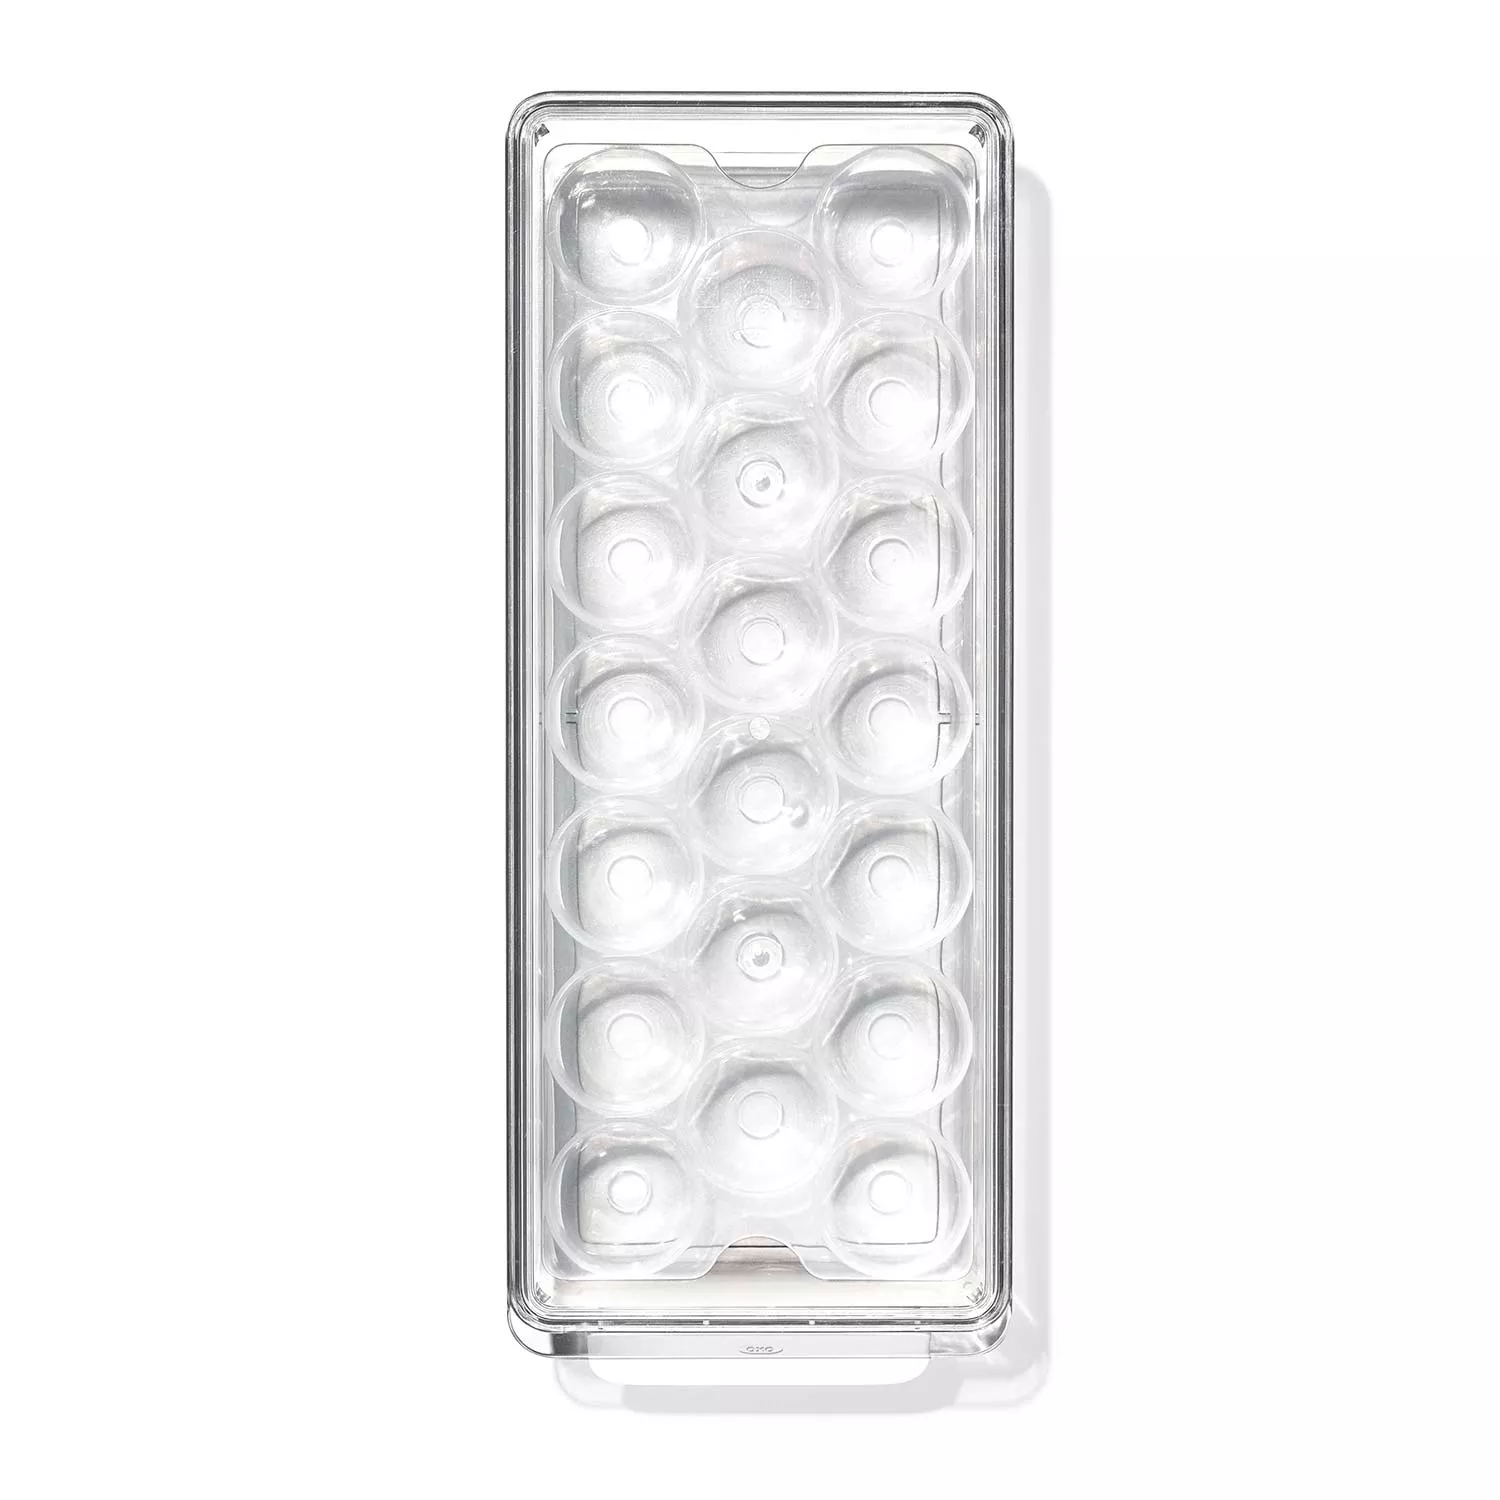 OXO Good Grips Refrigerator Egg Bin & Removable Tray